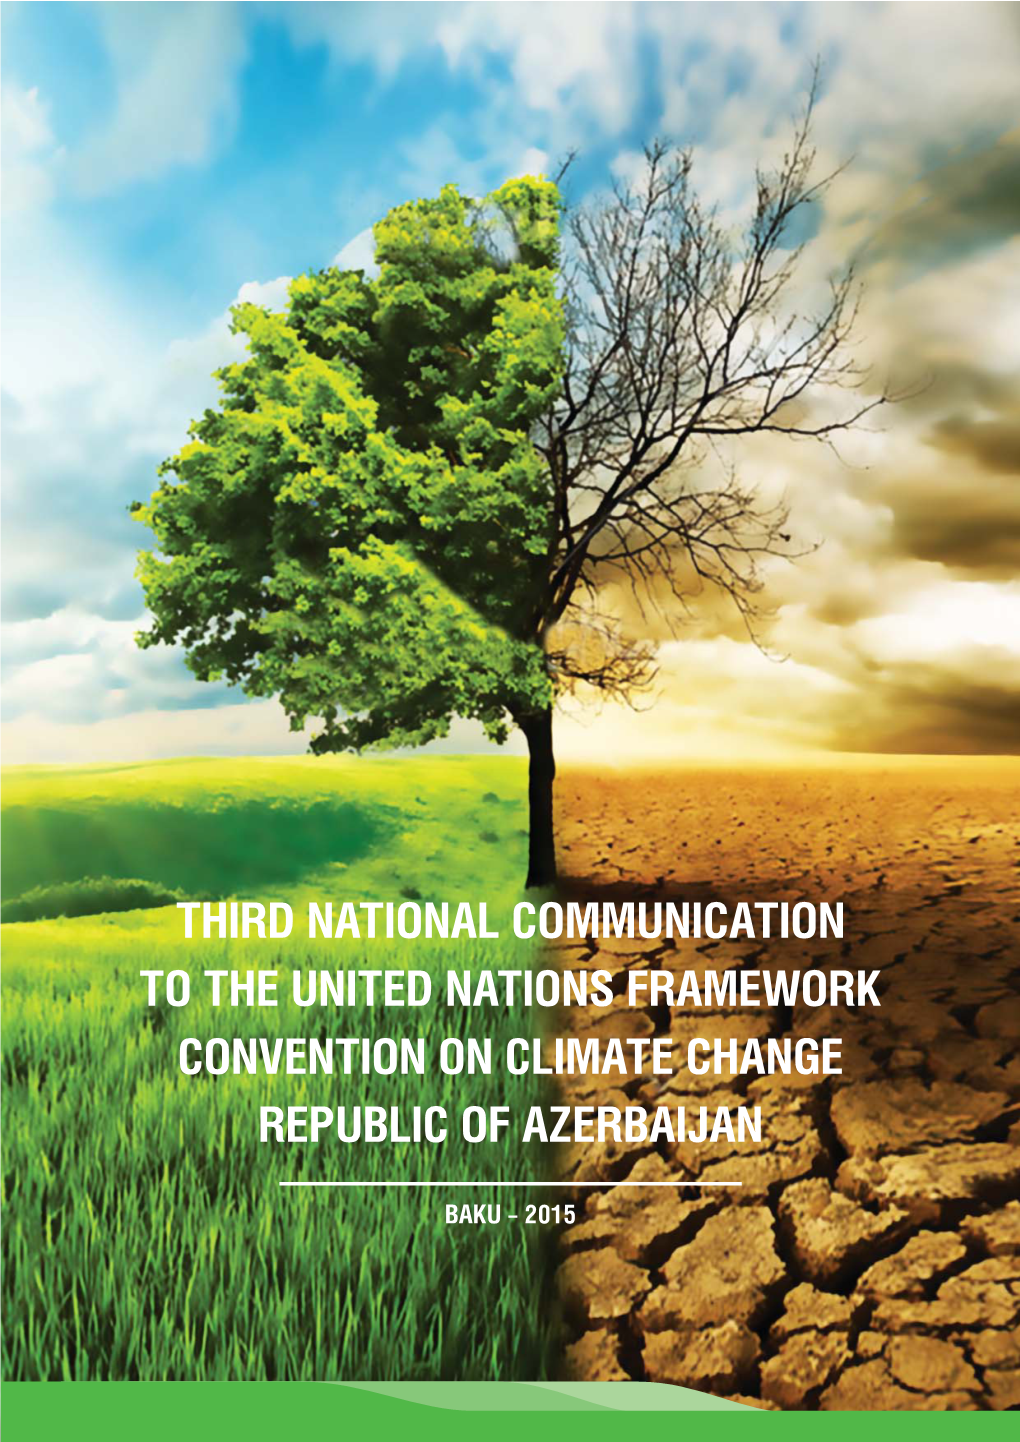 Azerbaijan National Communication on Climate Change